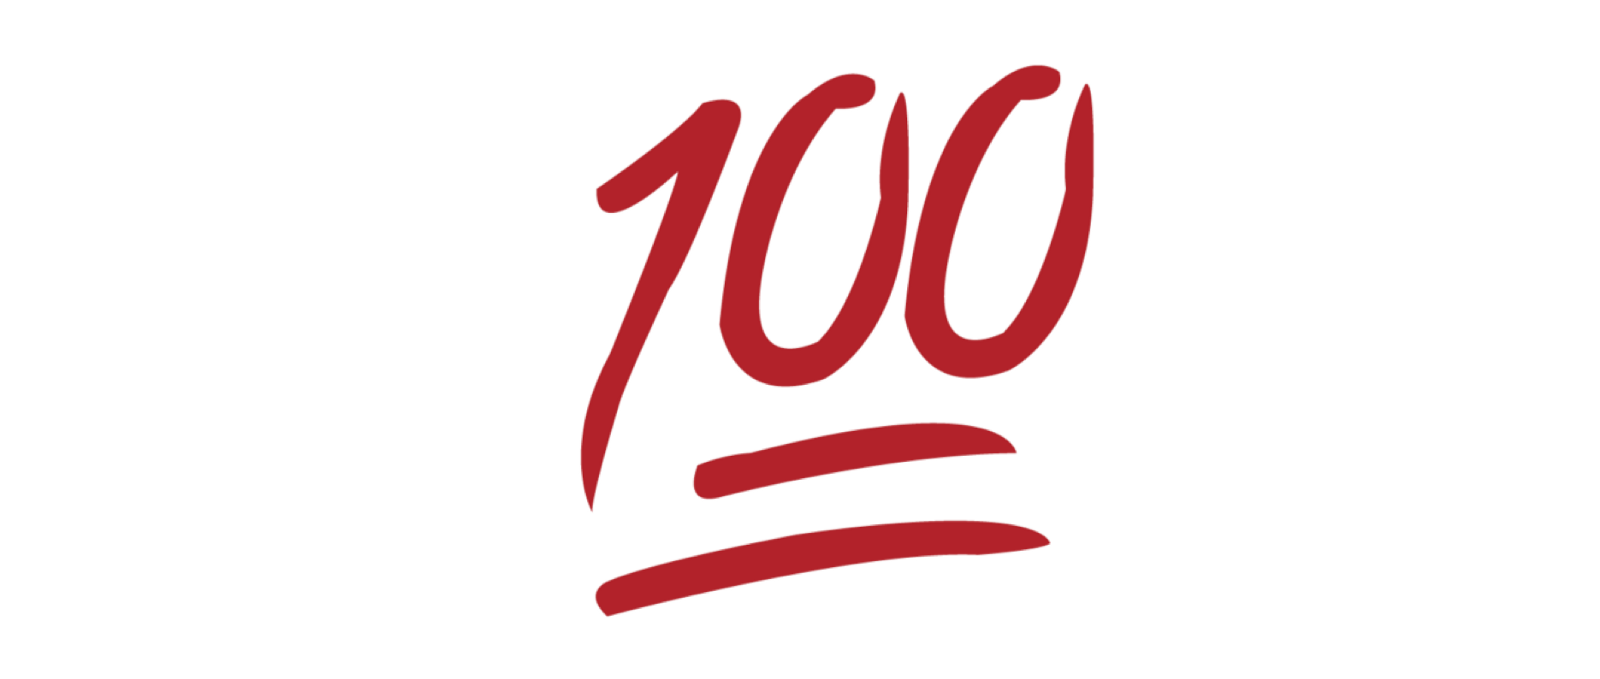 Red Comma Logo - Developer, Perfectionist, Immigrant and [Oxford comma] Troll